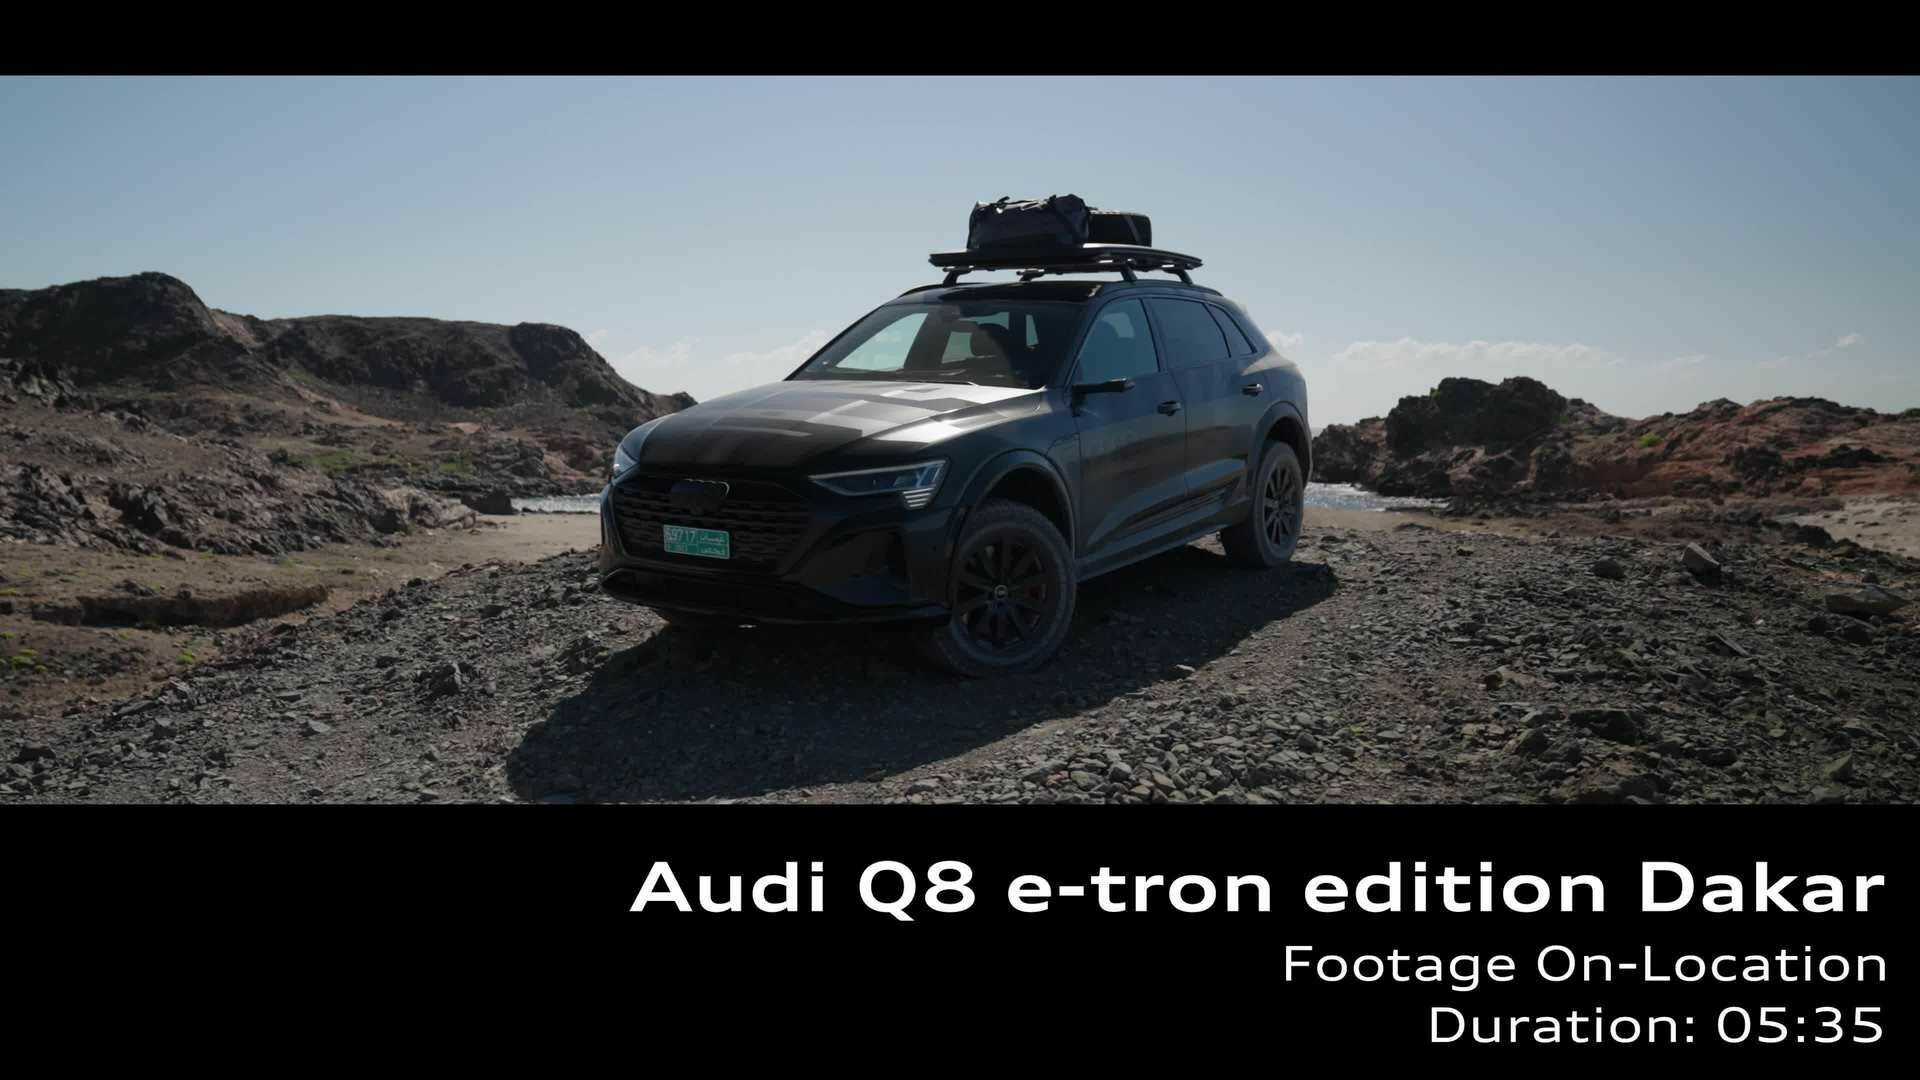 Audi Q8 e-tron edition Dakar – Footage (On-Location)